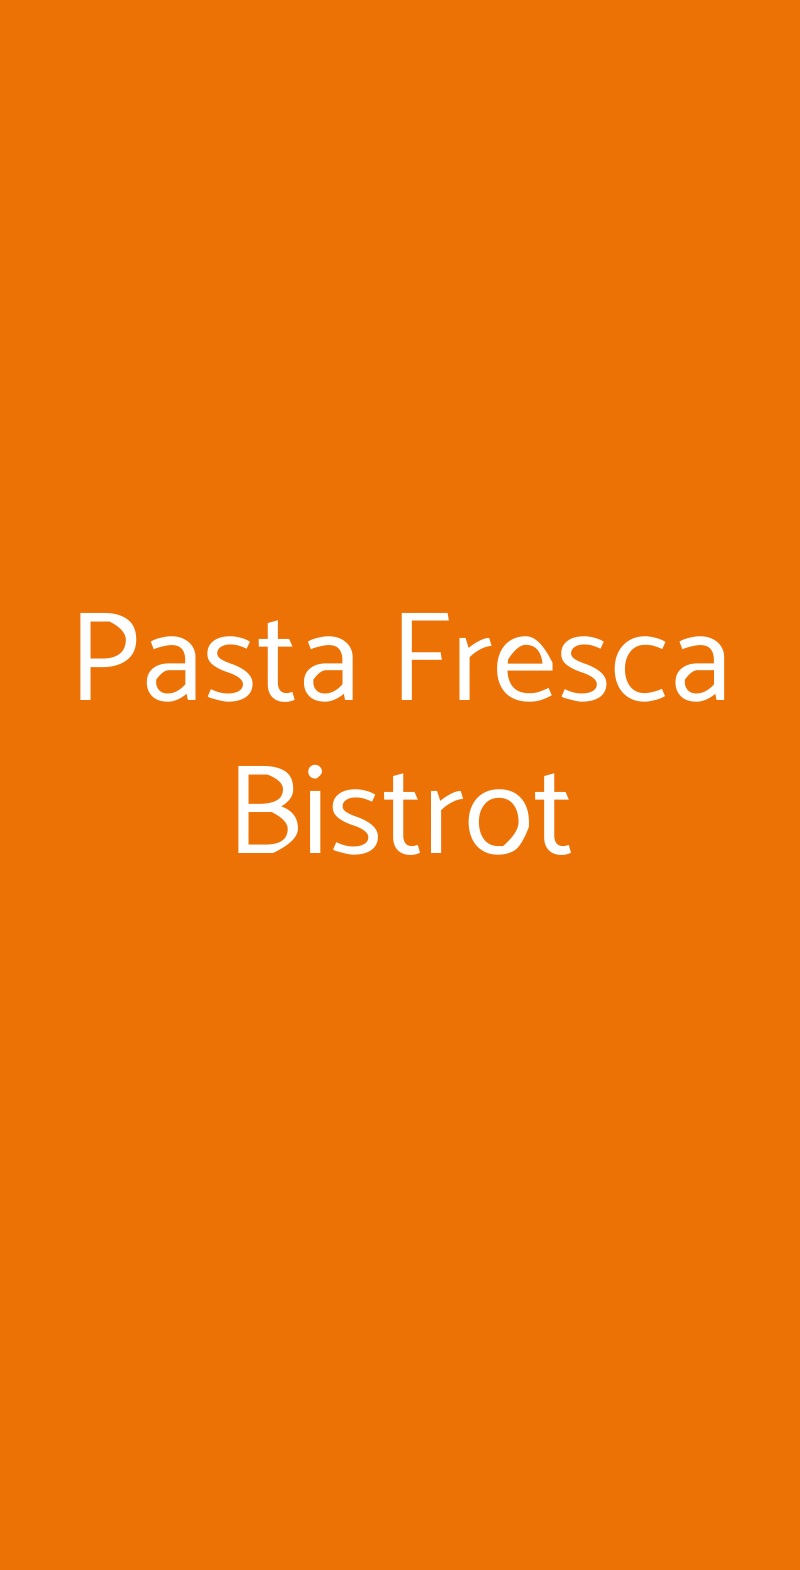 Pasta Fresca Bistrot Milano menù 1 pagina